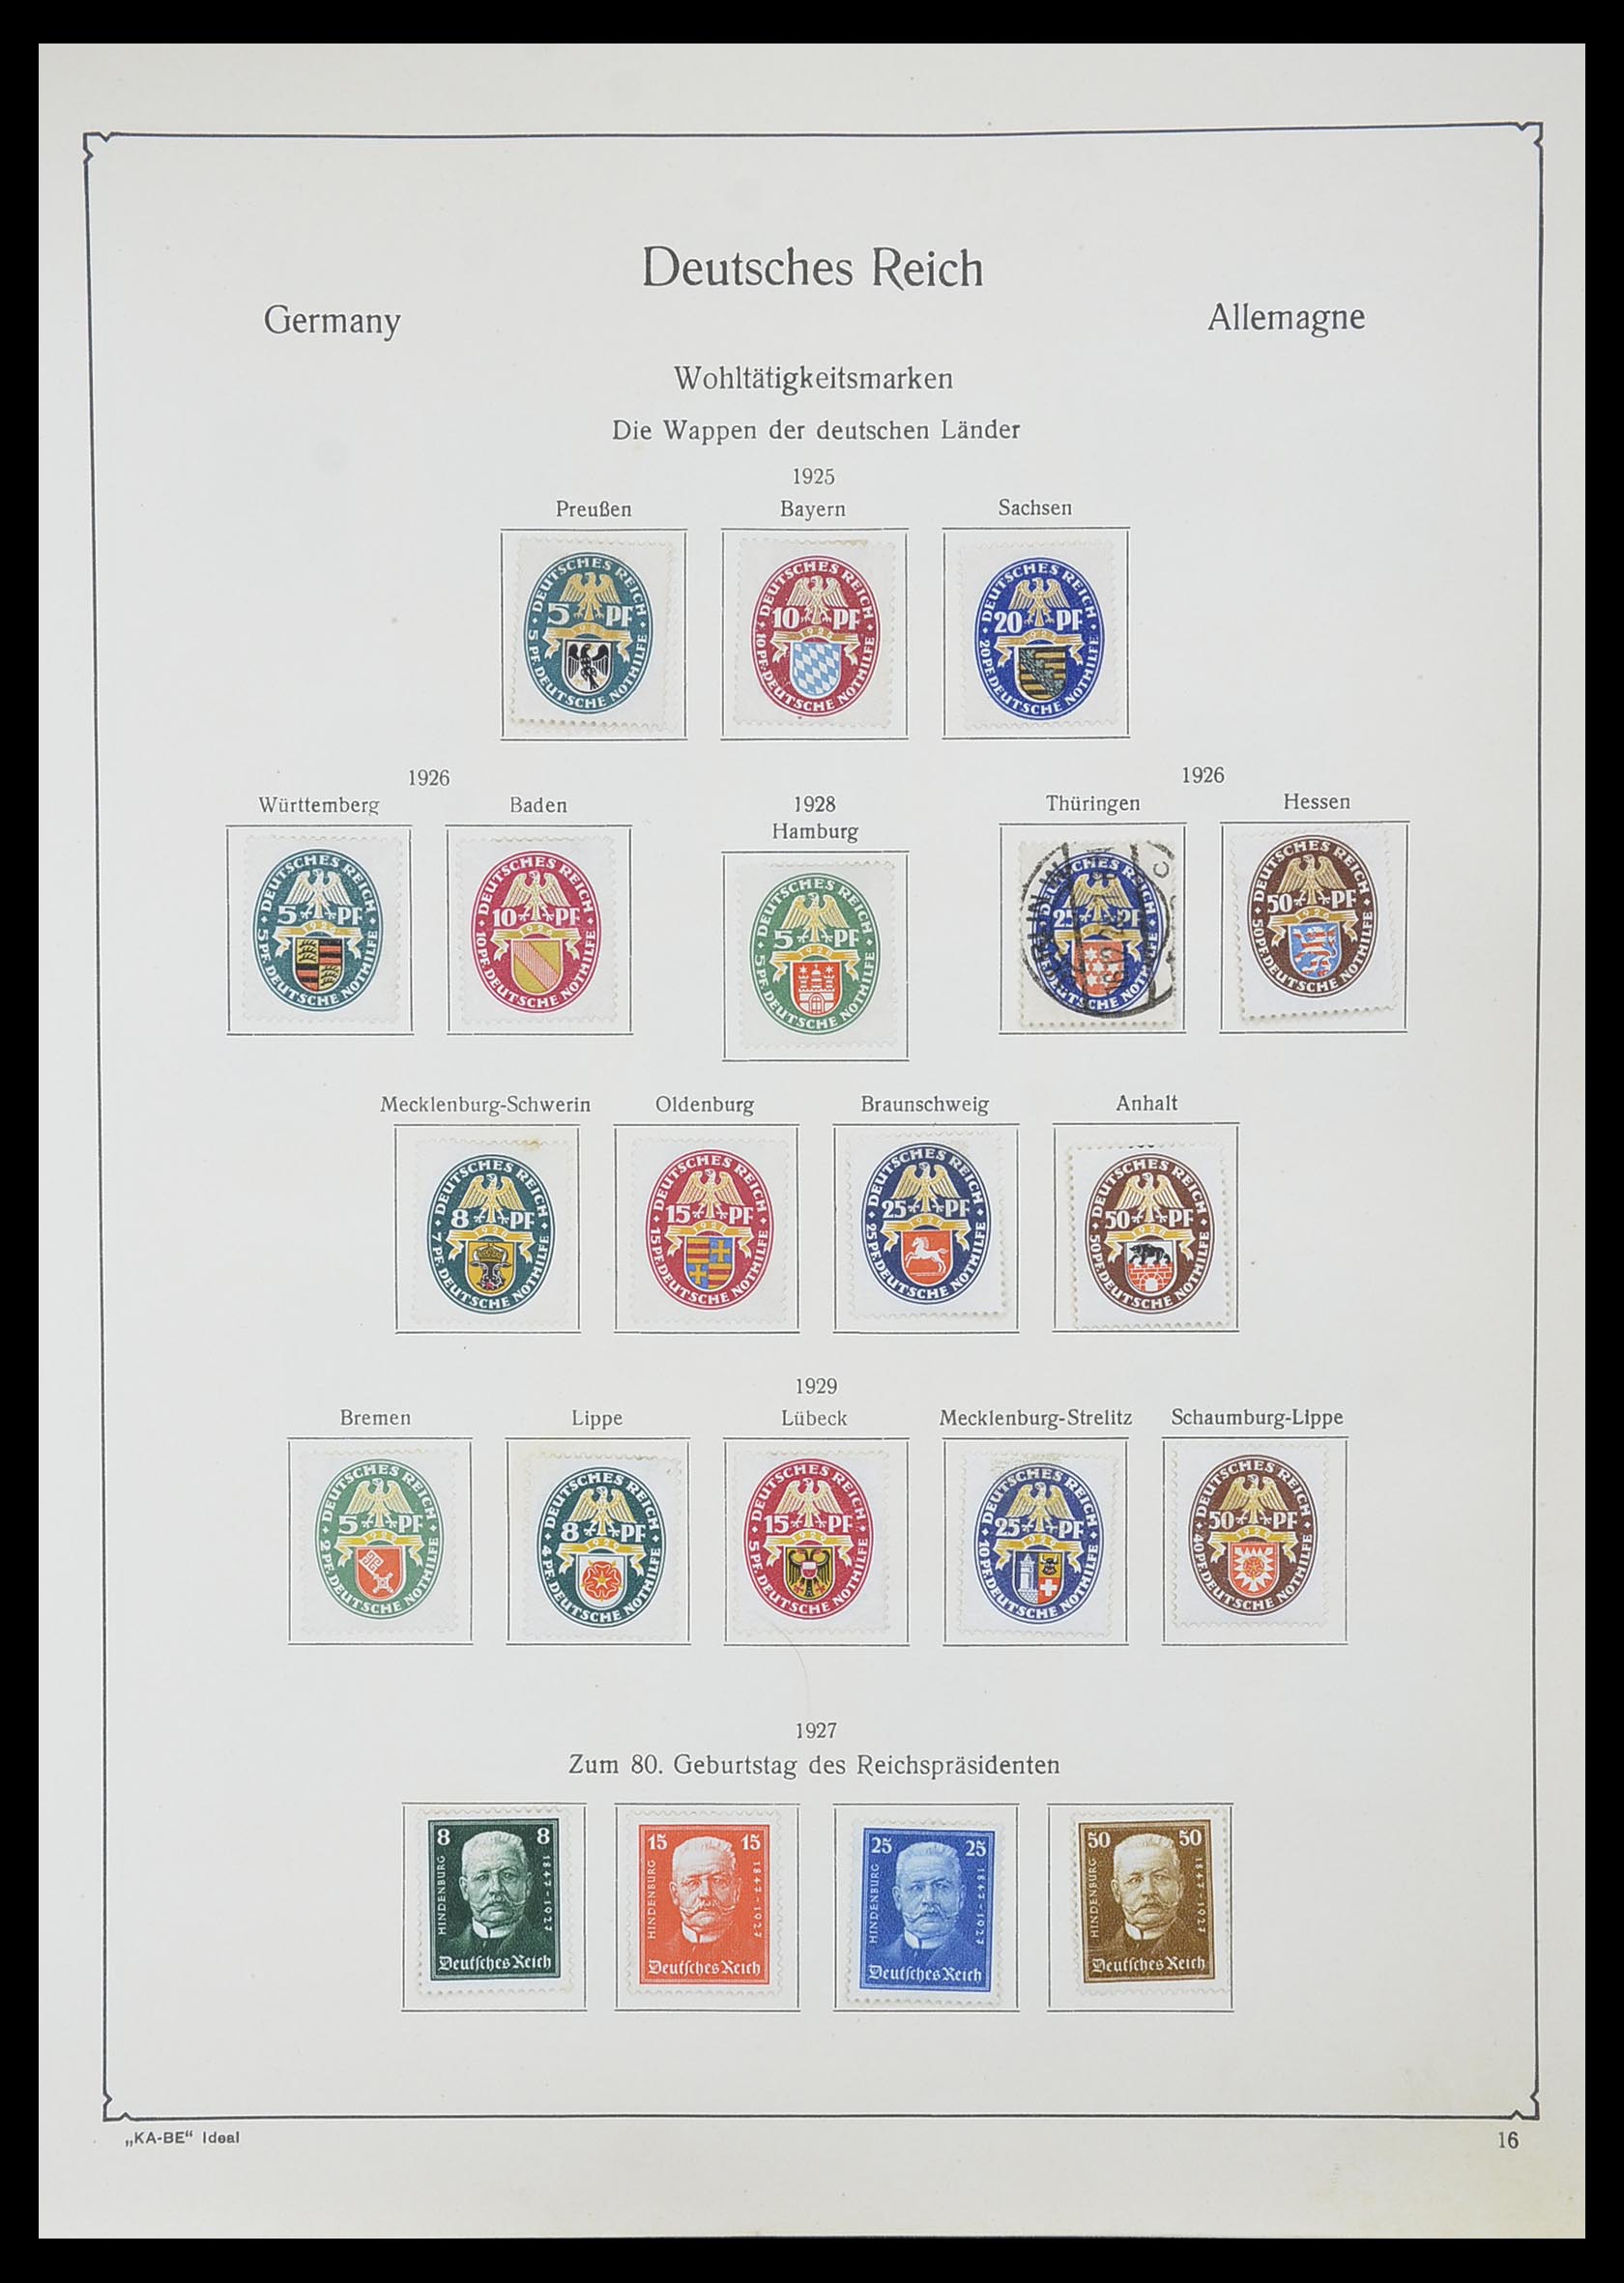 33359 021 - Stamp collection 33359 German Reich 1872-1945.